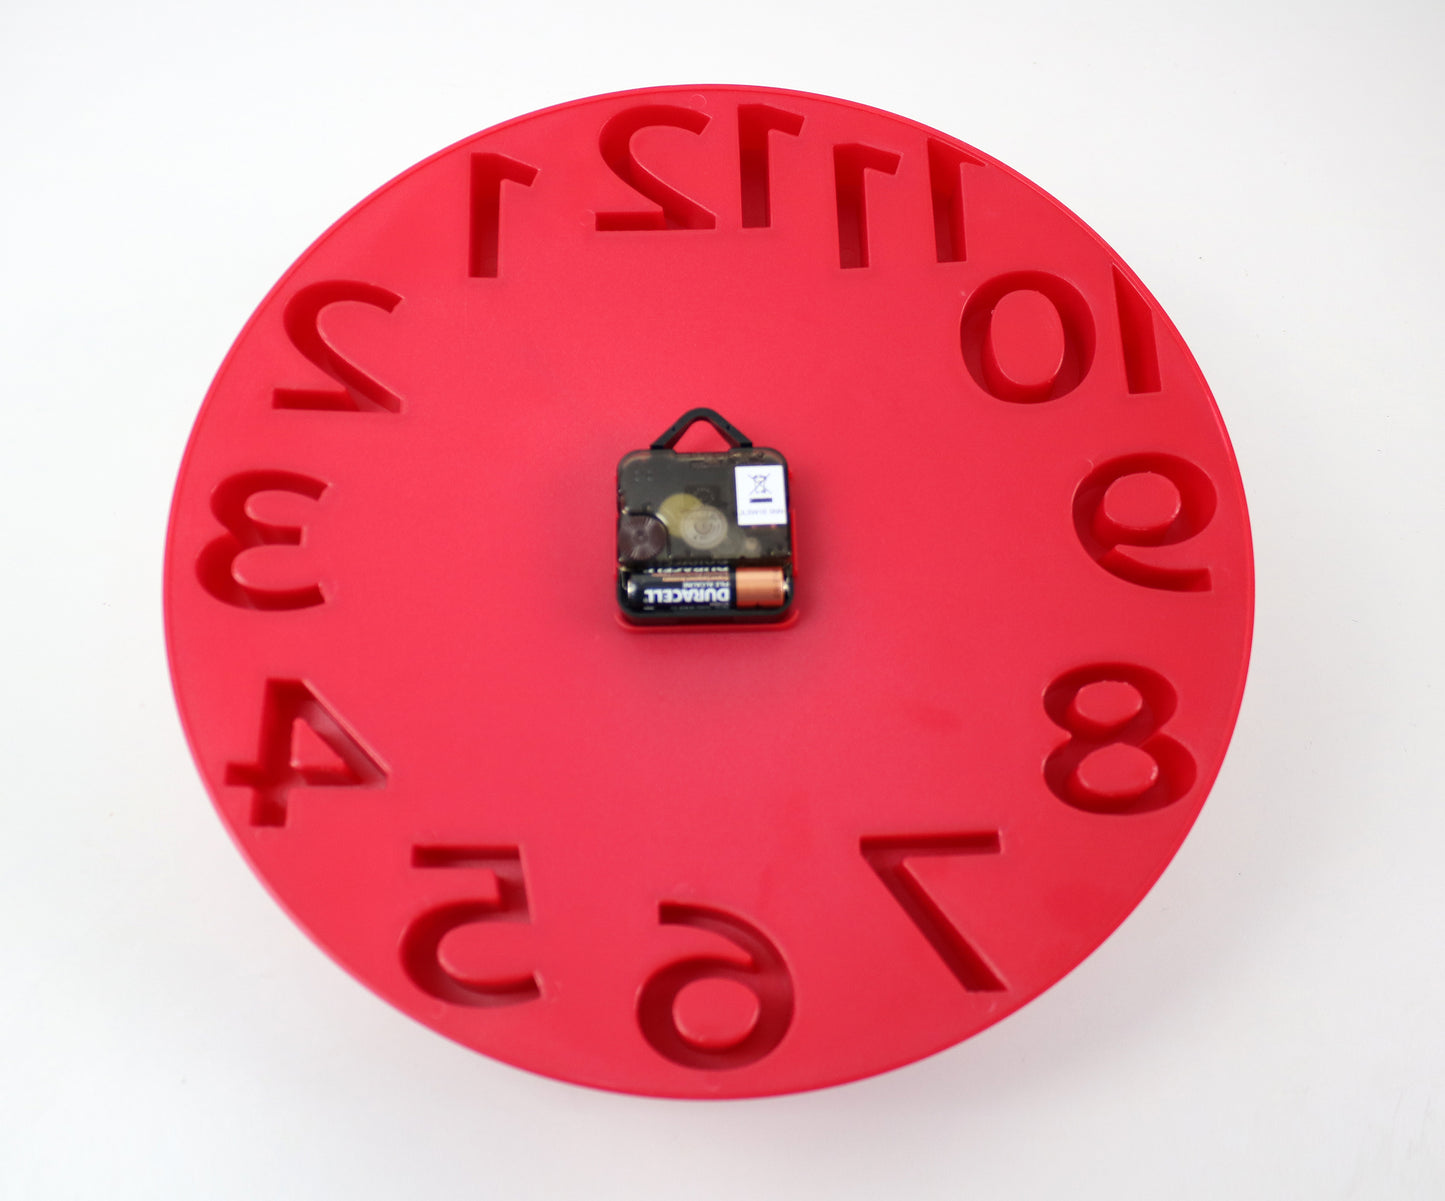 Preloved John Lewis pressed red plastic wall clock - quartz movement